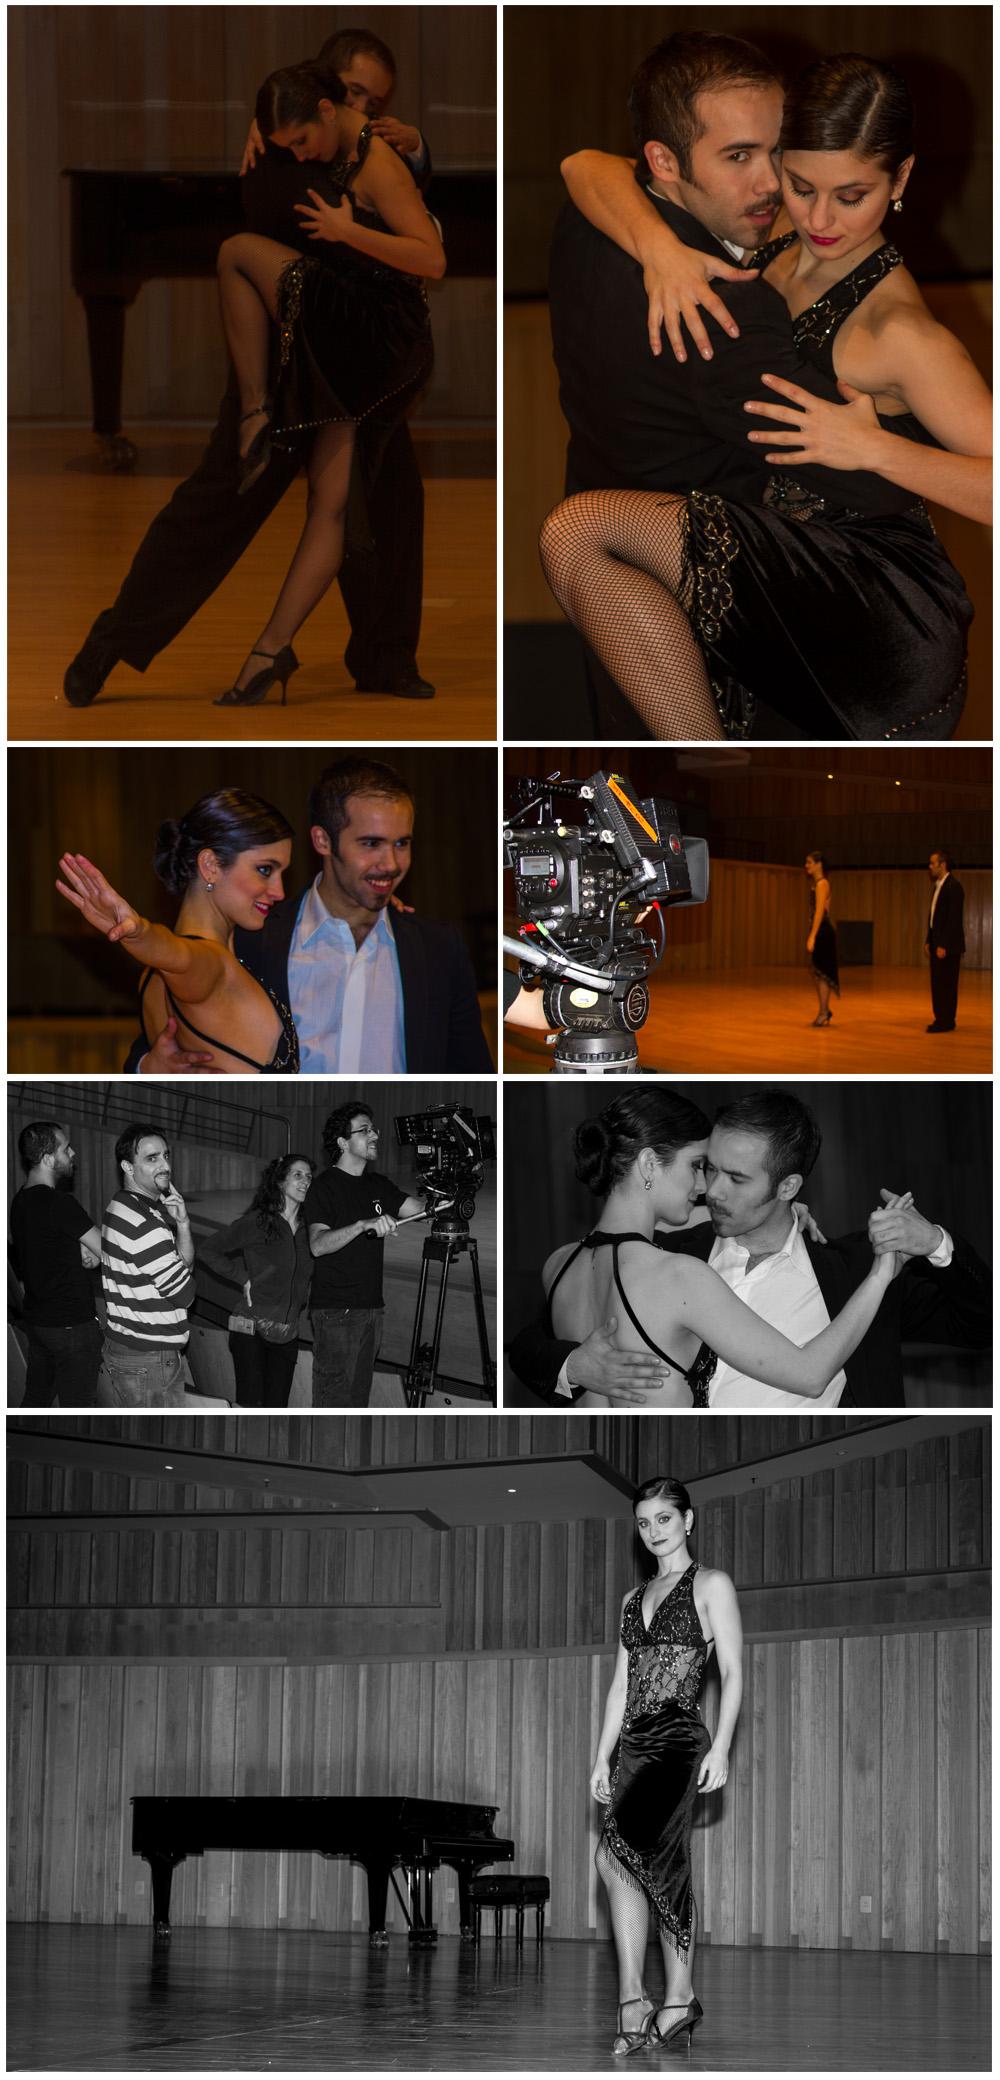 Final Tango Dance in La Usina del Arte Final dance in “La Usina del Arte.”<br />
